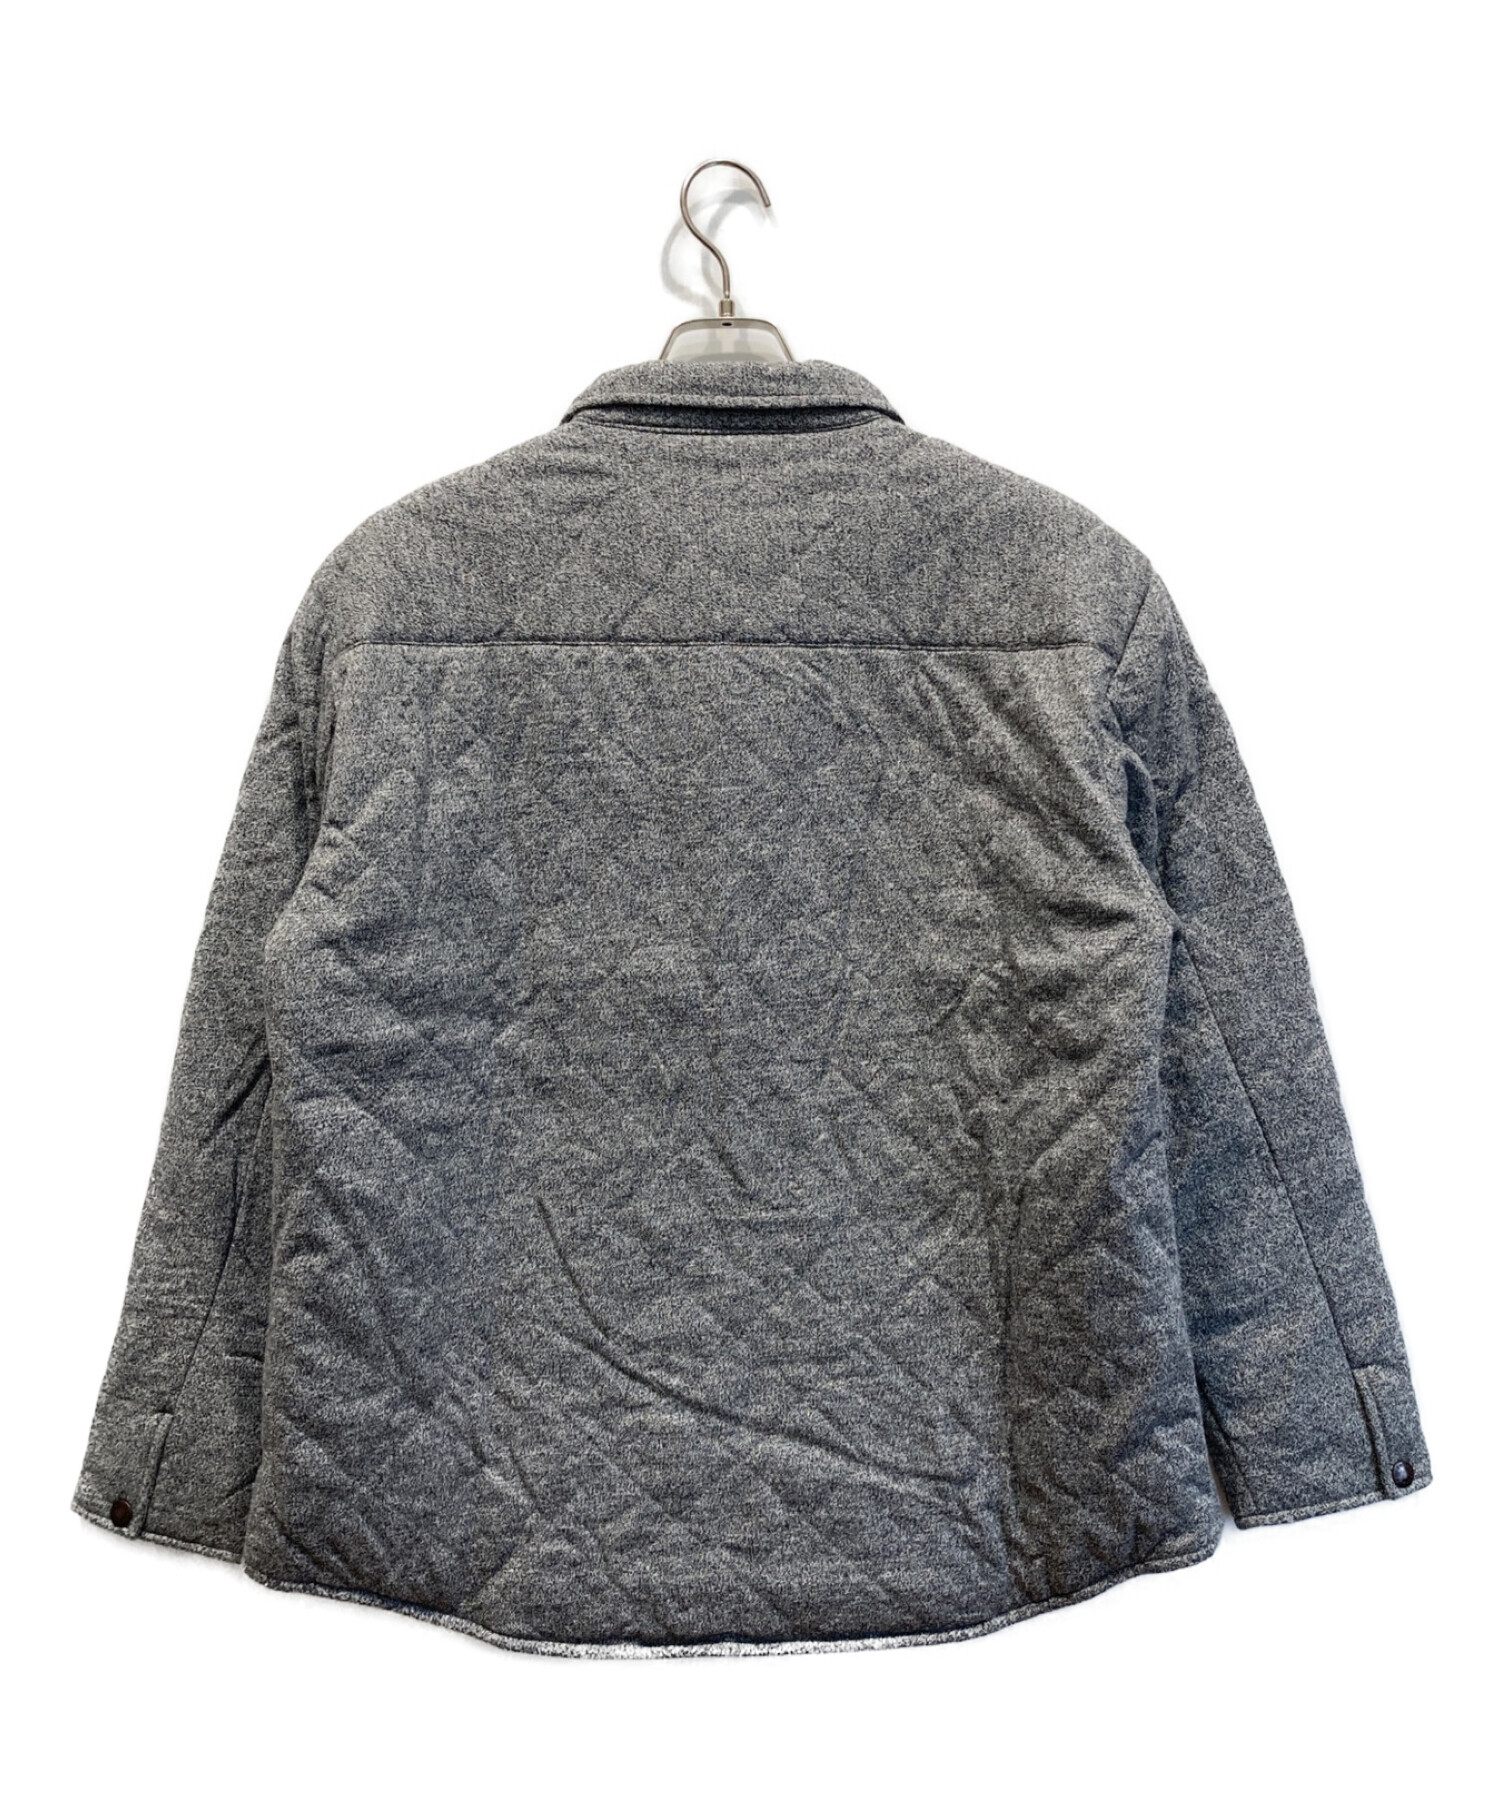 GO HEMP Botanica jacketゴーヘンプ Mサイズ 美品 ダウン-